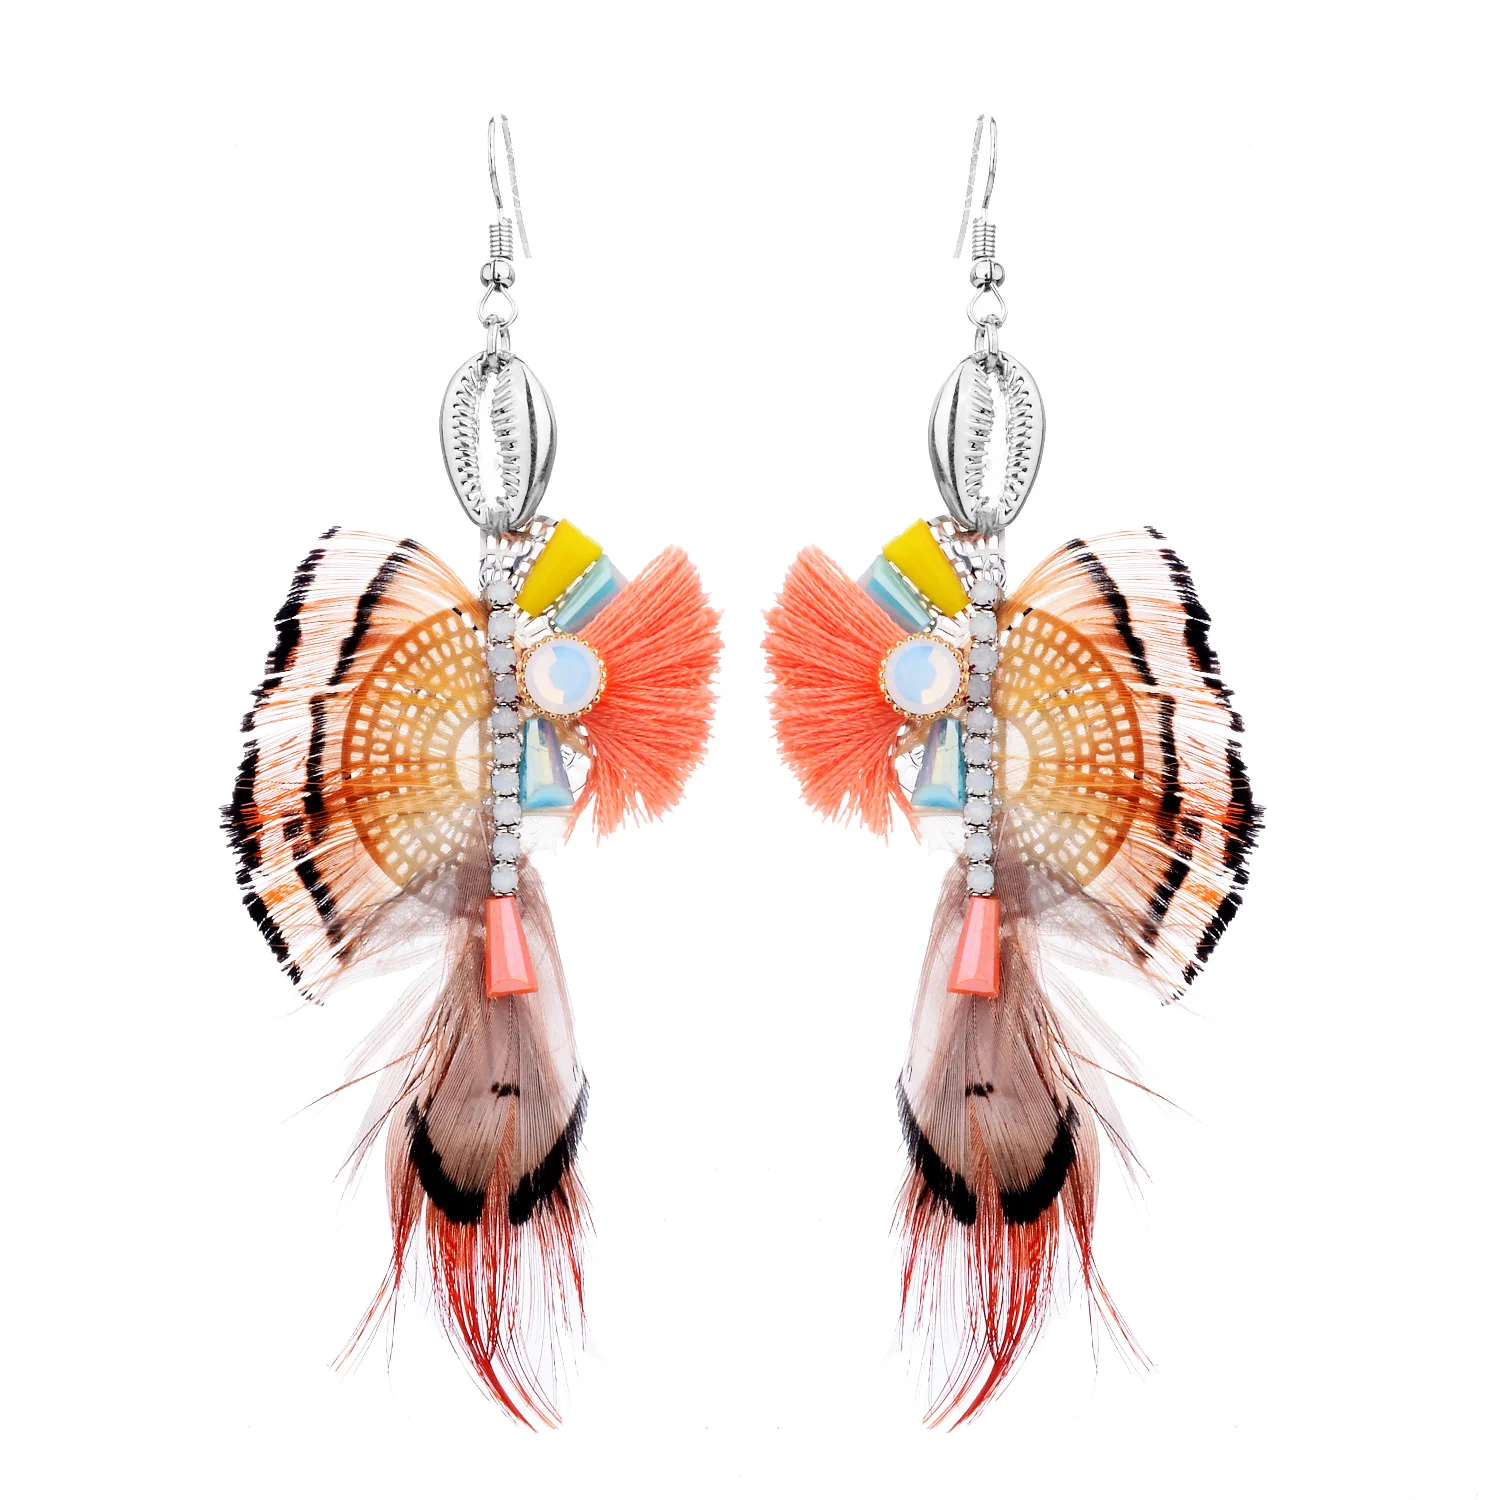 

indian feather earrings silver shell tassel earrings chicken peacock feather long drop statement earrings for women party, As photo